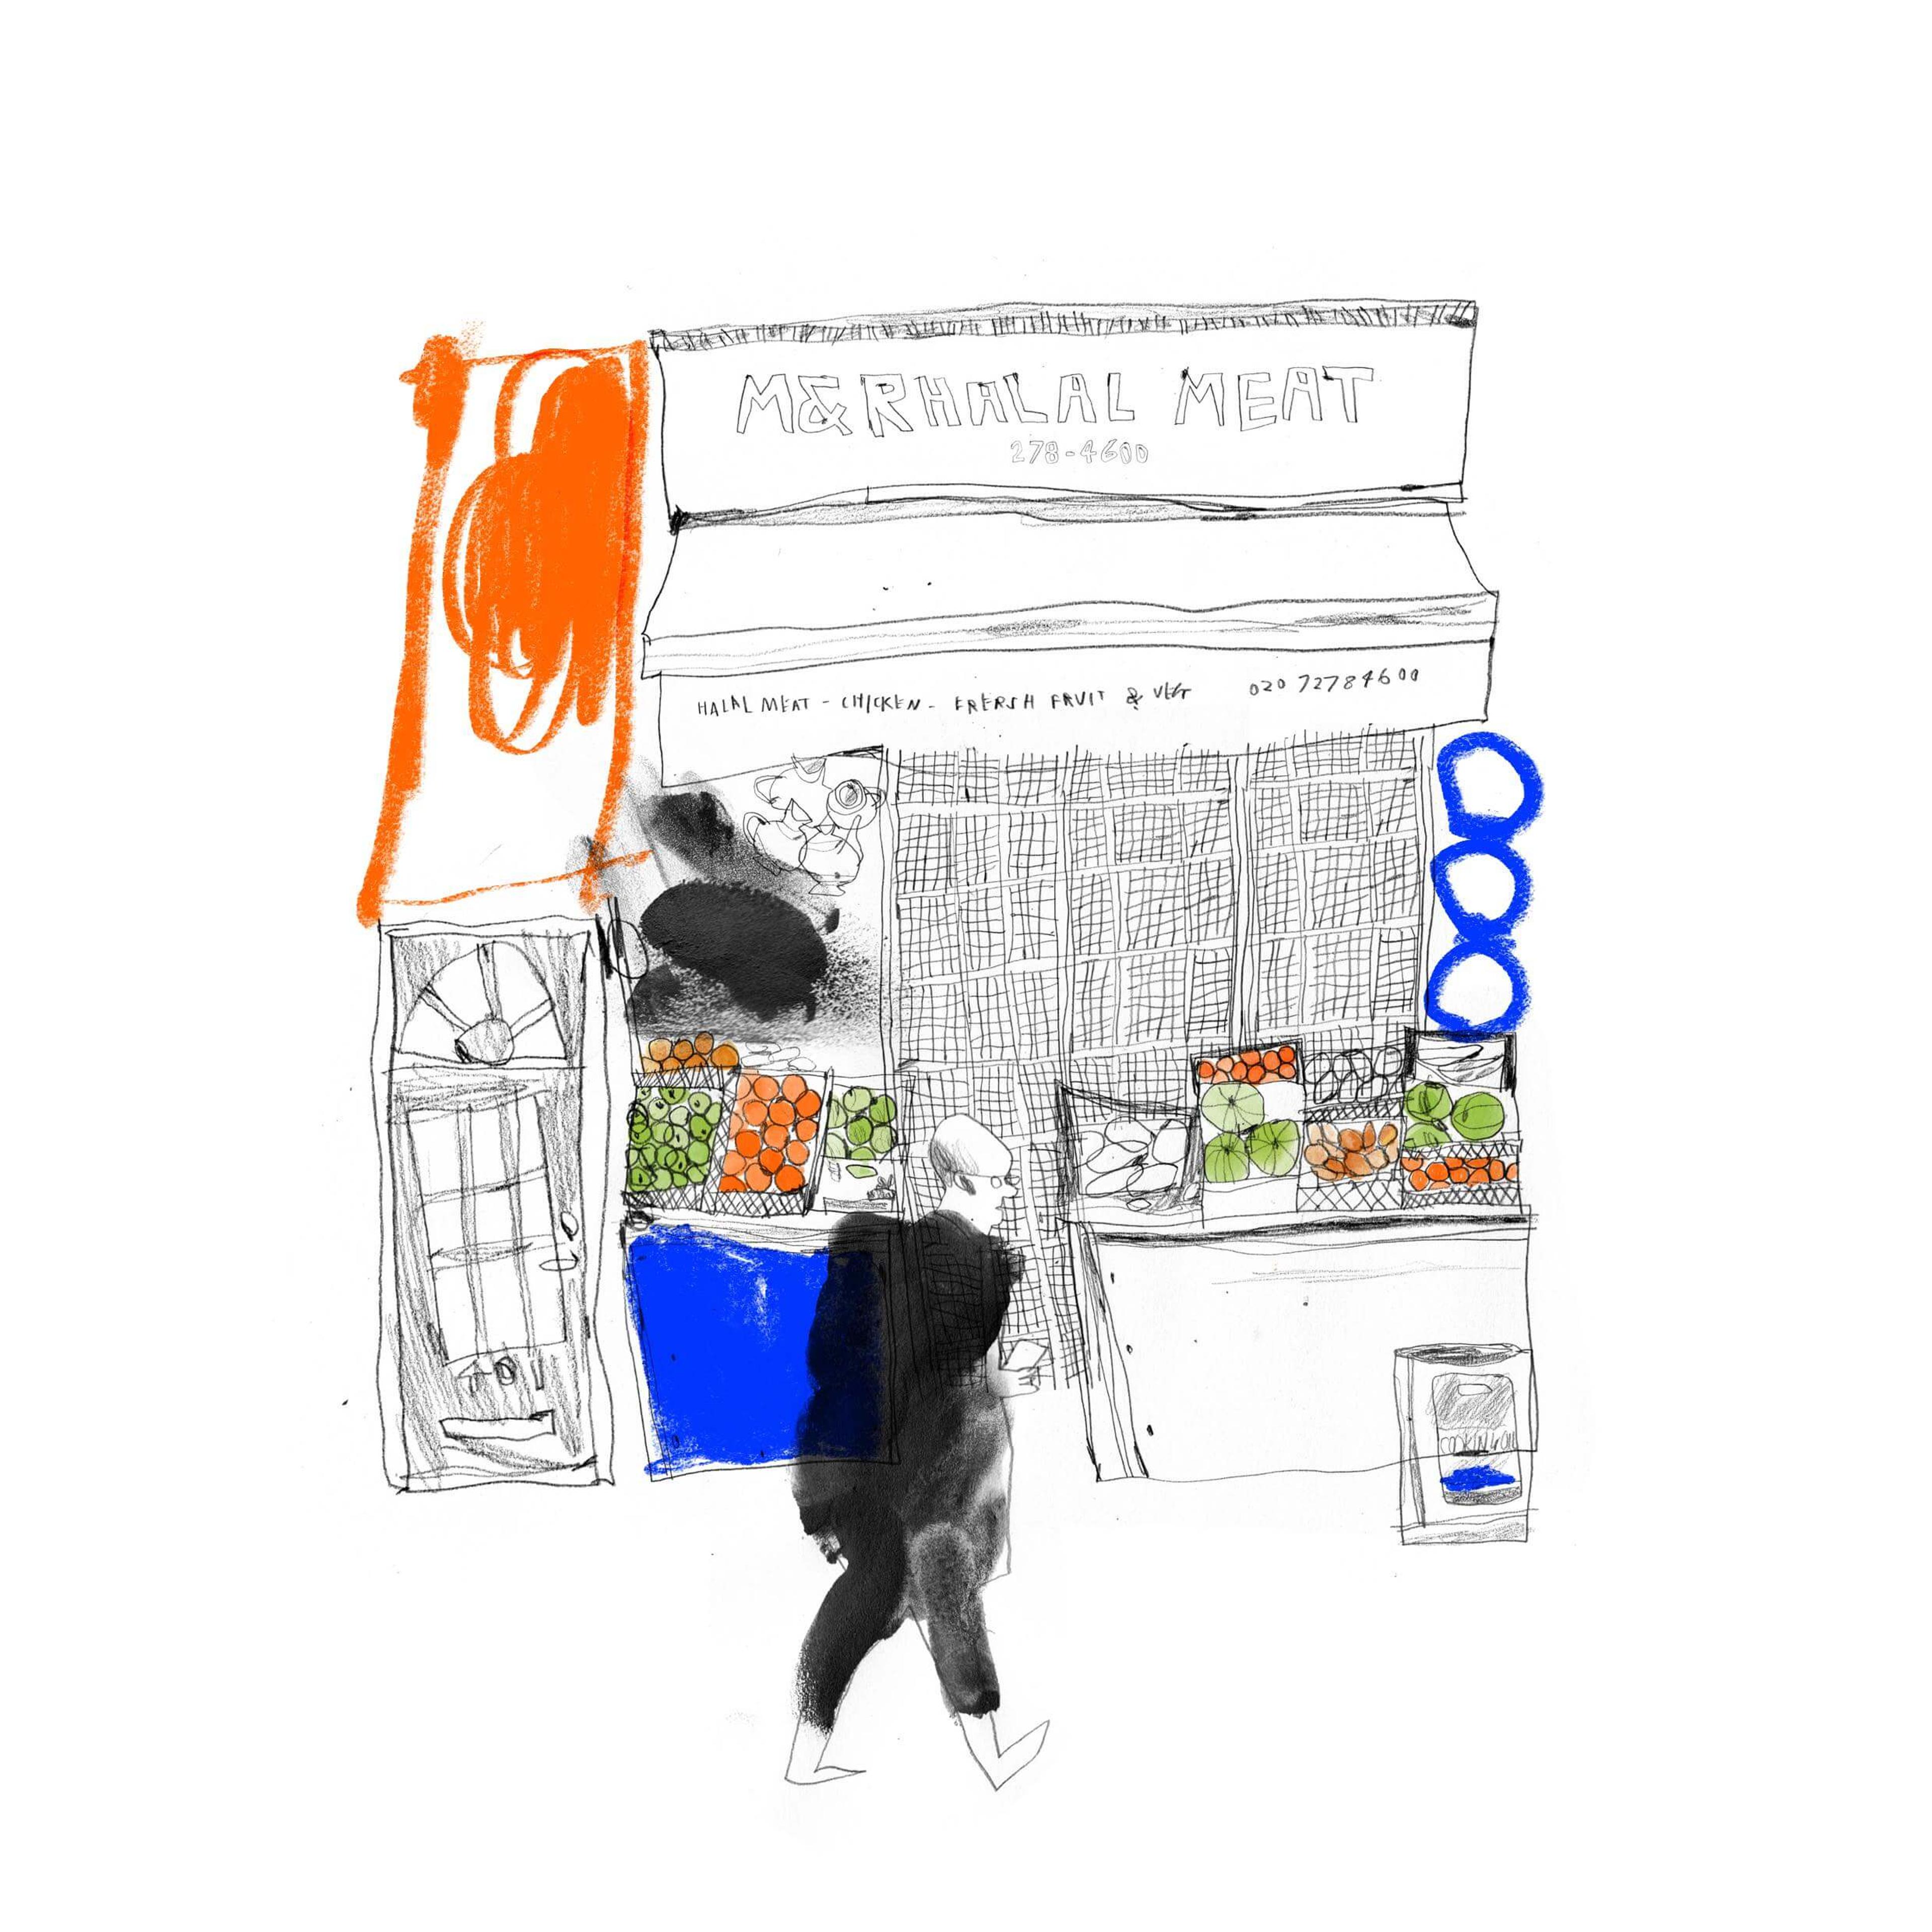 Illustration of a market stall